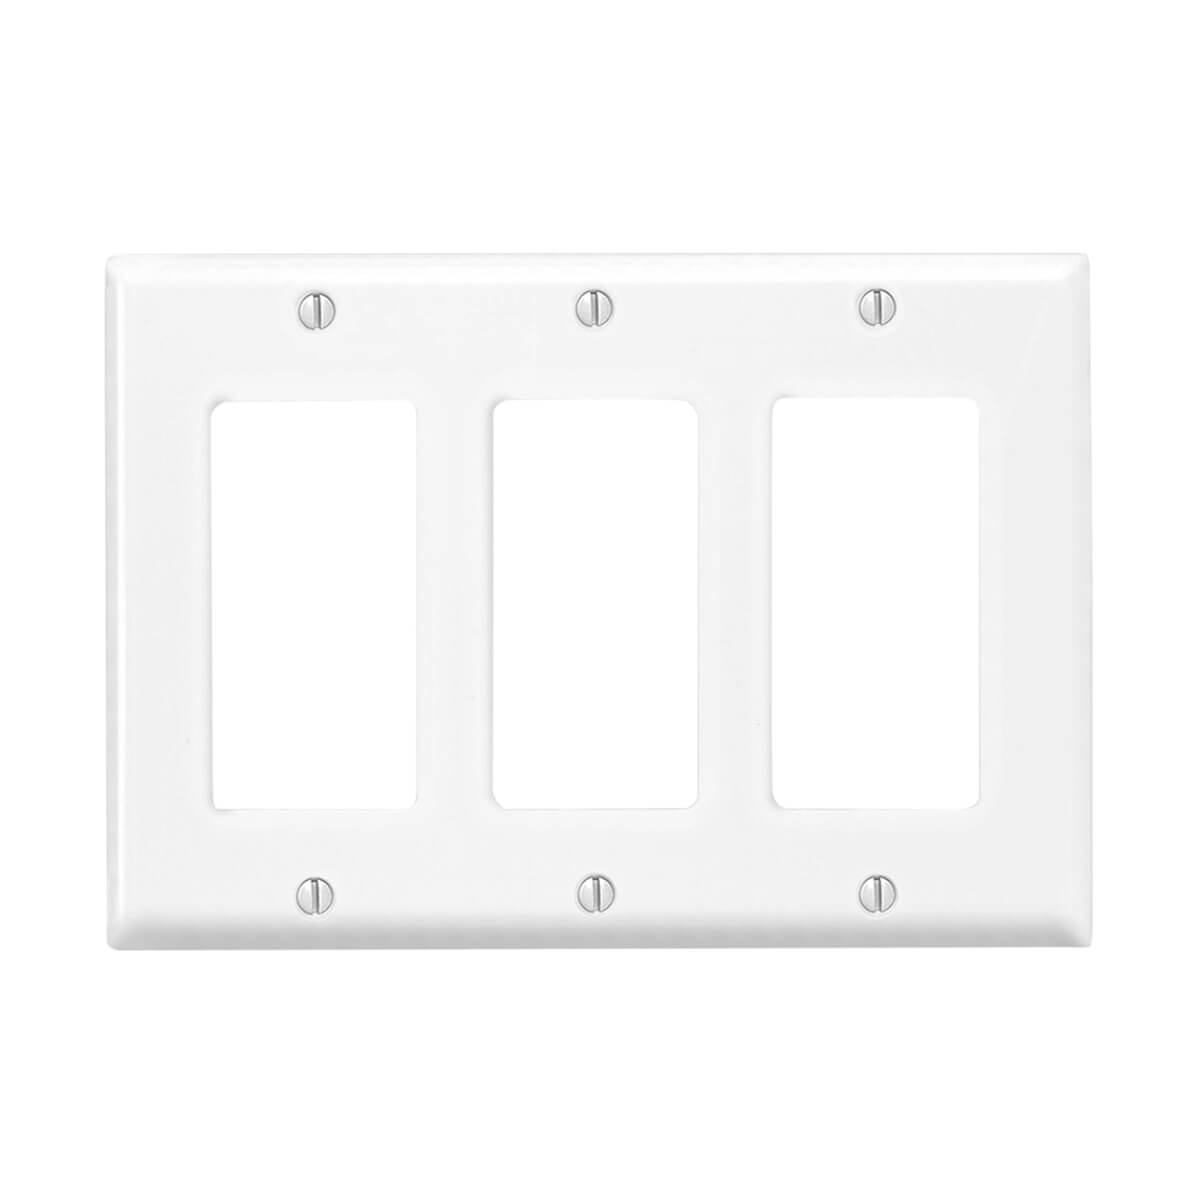 Leviton® Decora 3-Gang Wall Plate - White